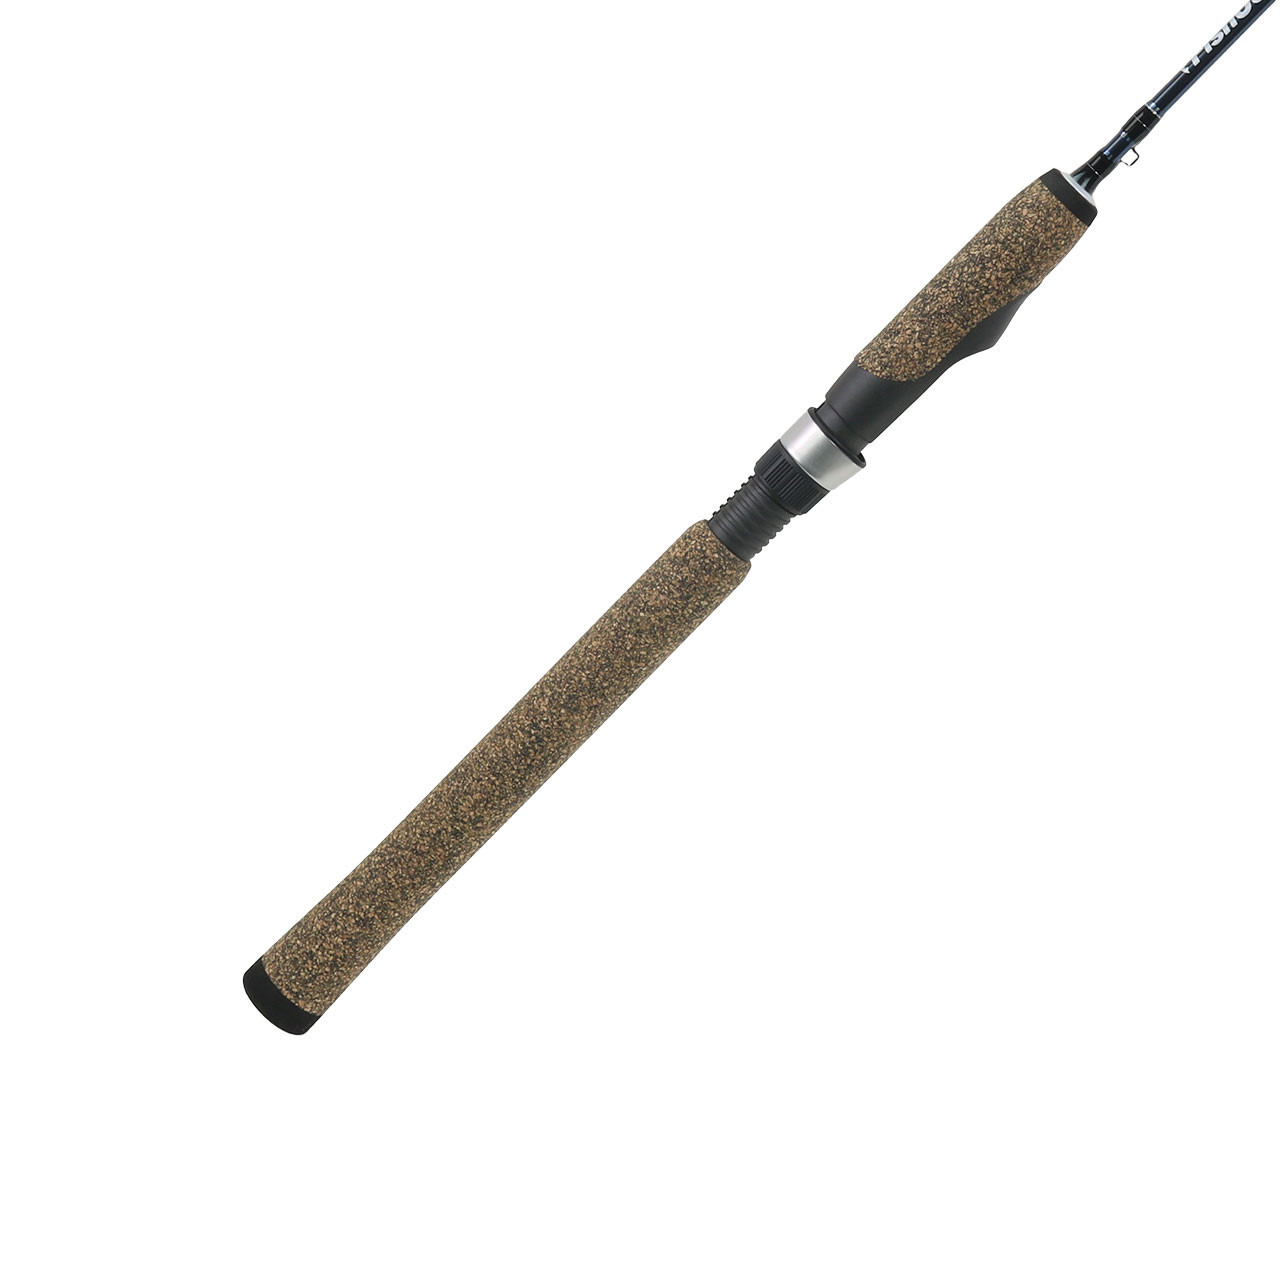 13 Fishing Defy Silver Spinning Rod-6'6 UL